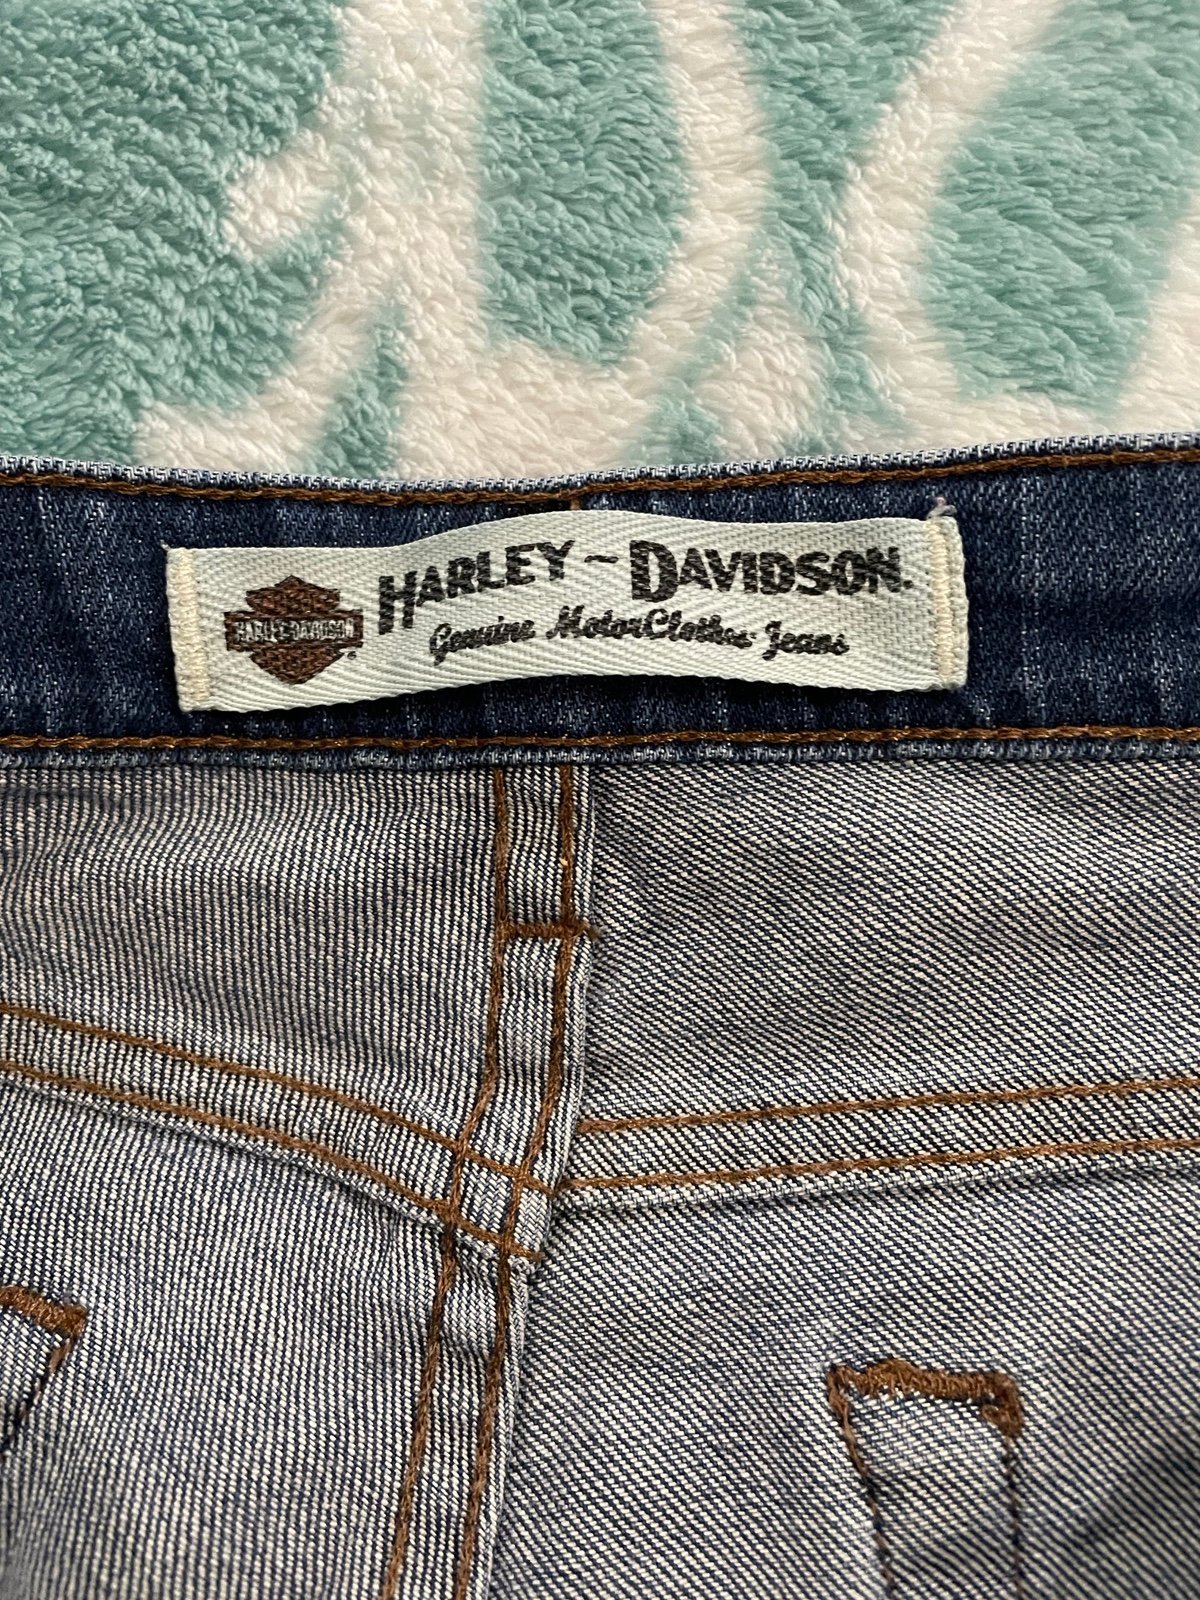 Beautiful Harley Davidson Denim Low Rise Bootcut Jeans Size: 10 K1pEgalcB Great